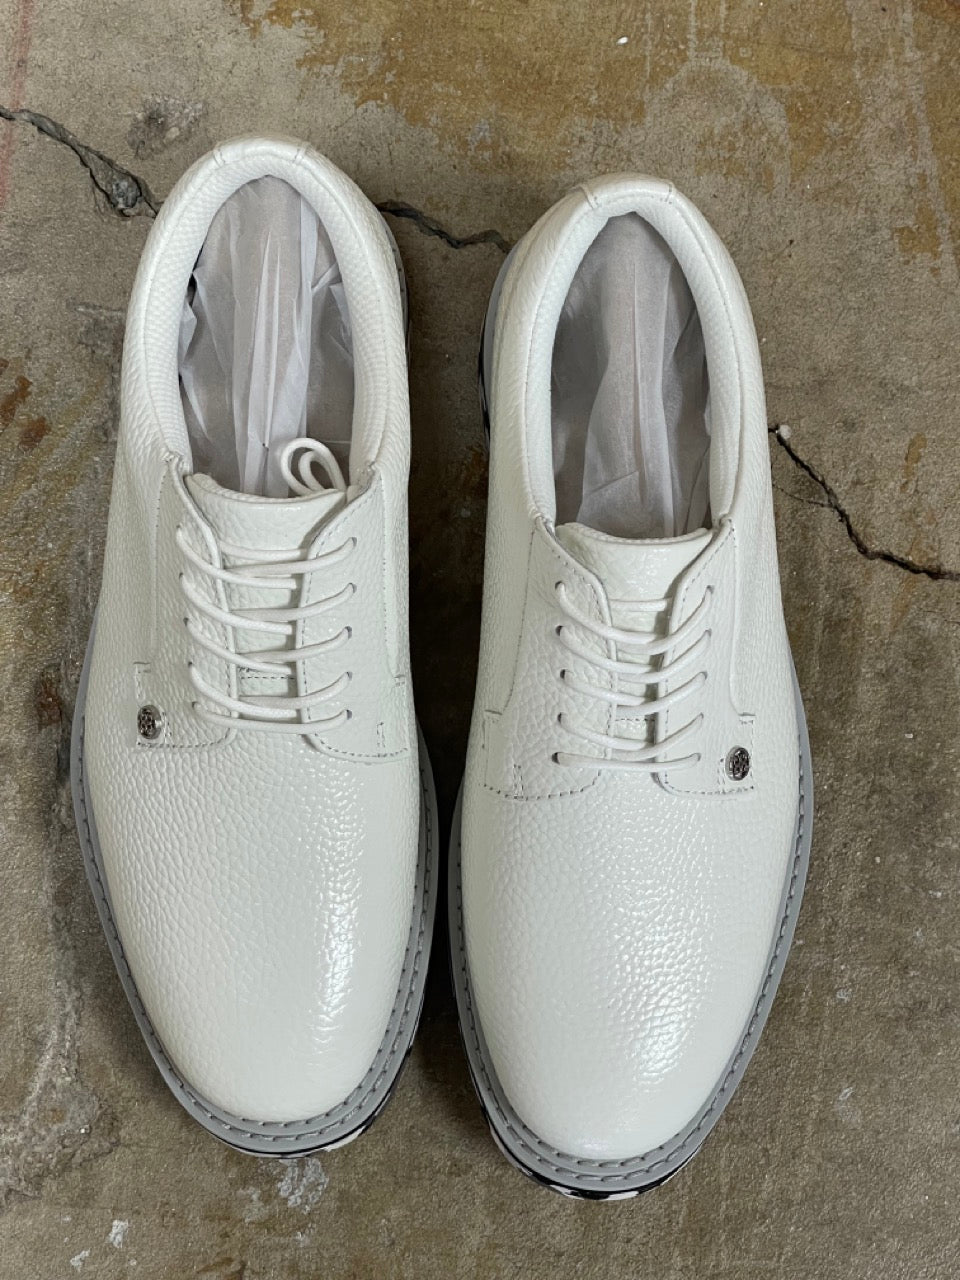 GFORE Men's Limited Edition Camo Gallivanter Golf Shoes